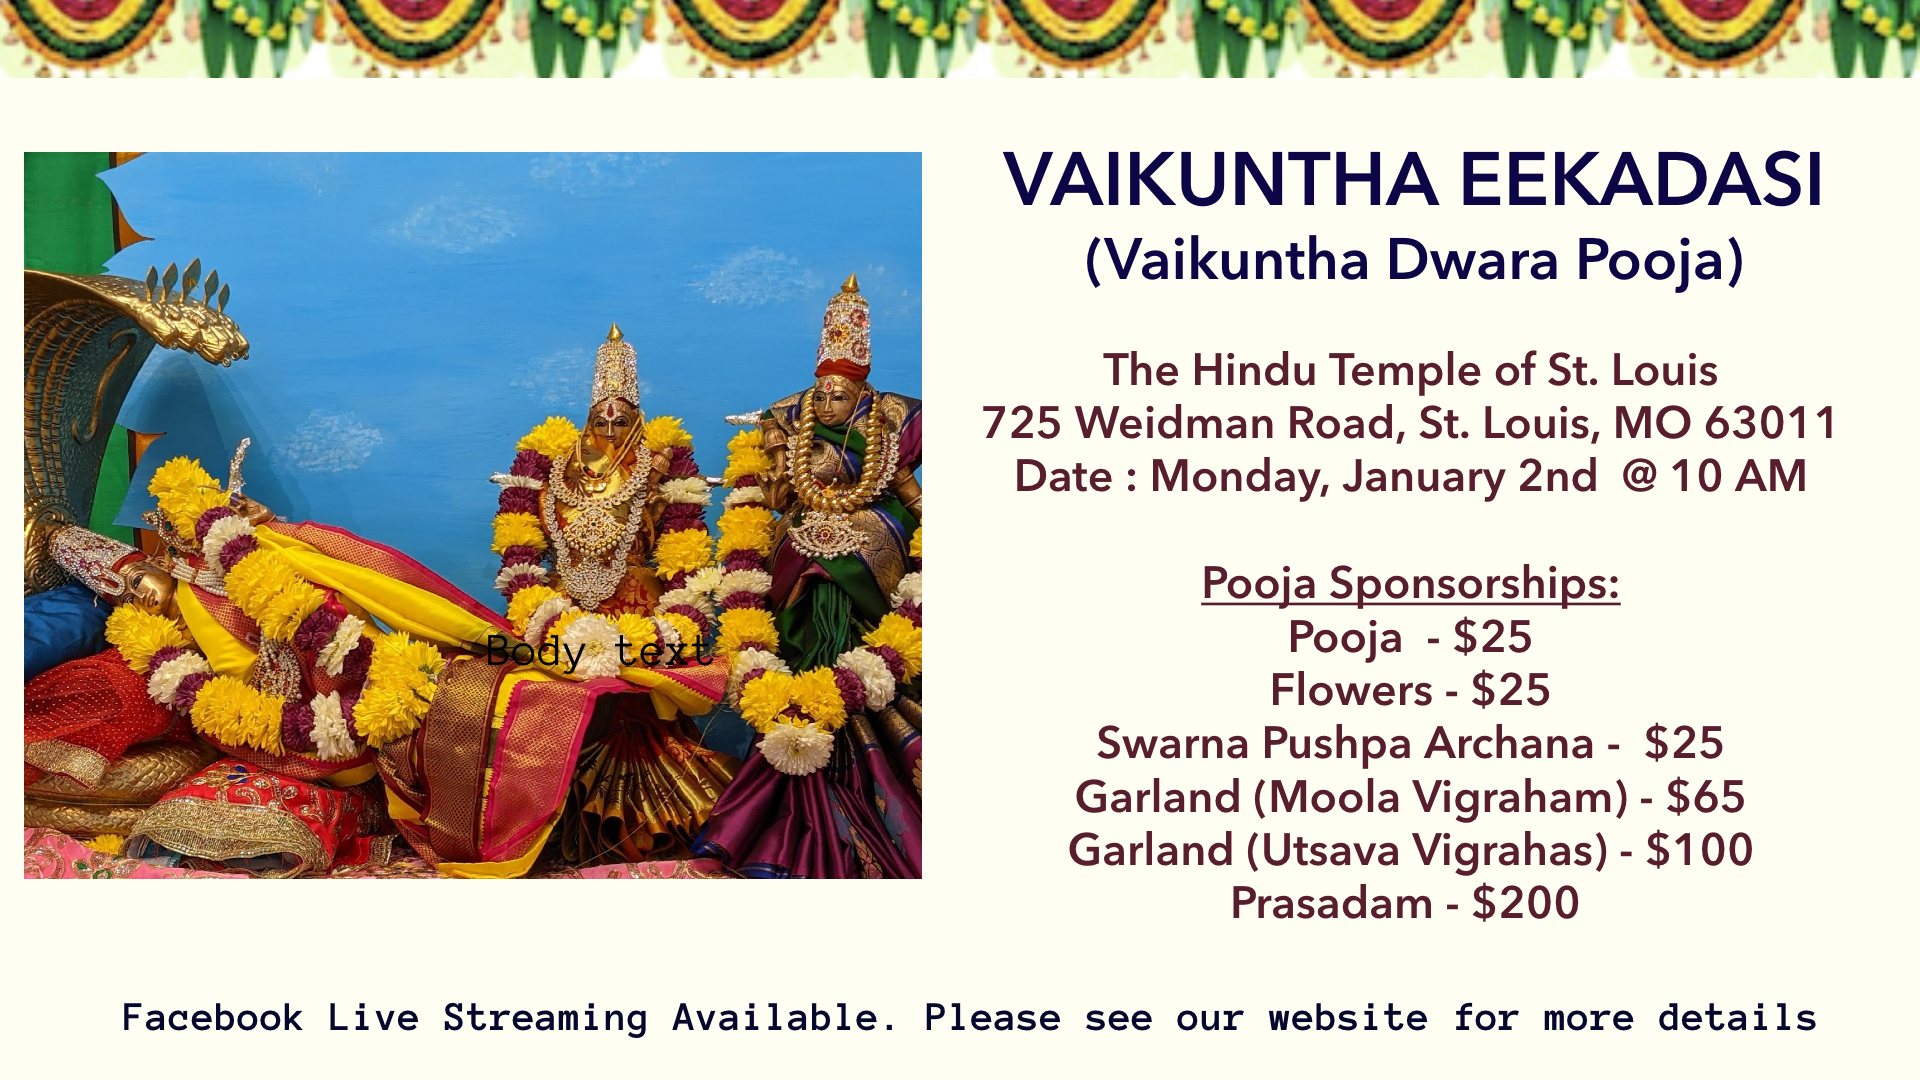 VAIKUNTHA EEKADASI (Vaikuntha Dwara Pooja) @ Jan 2nd, 10 AM